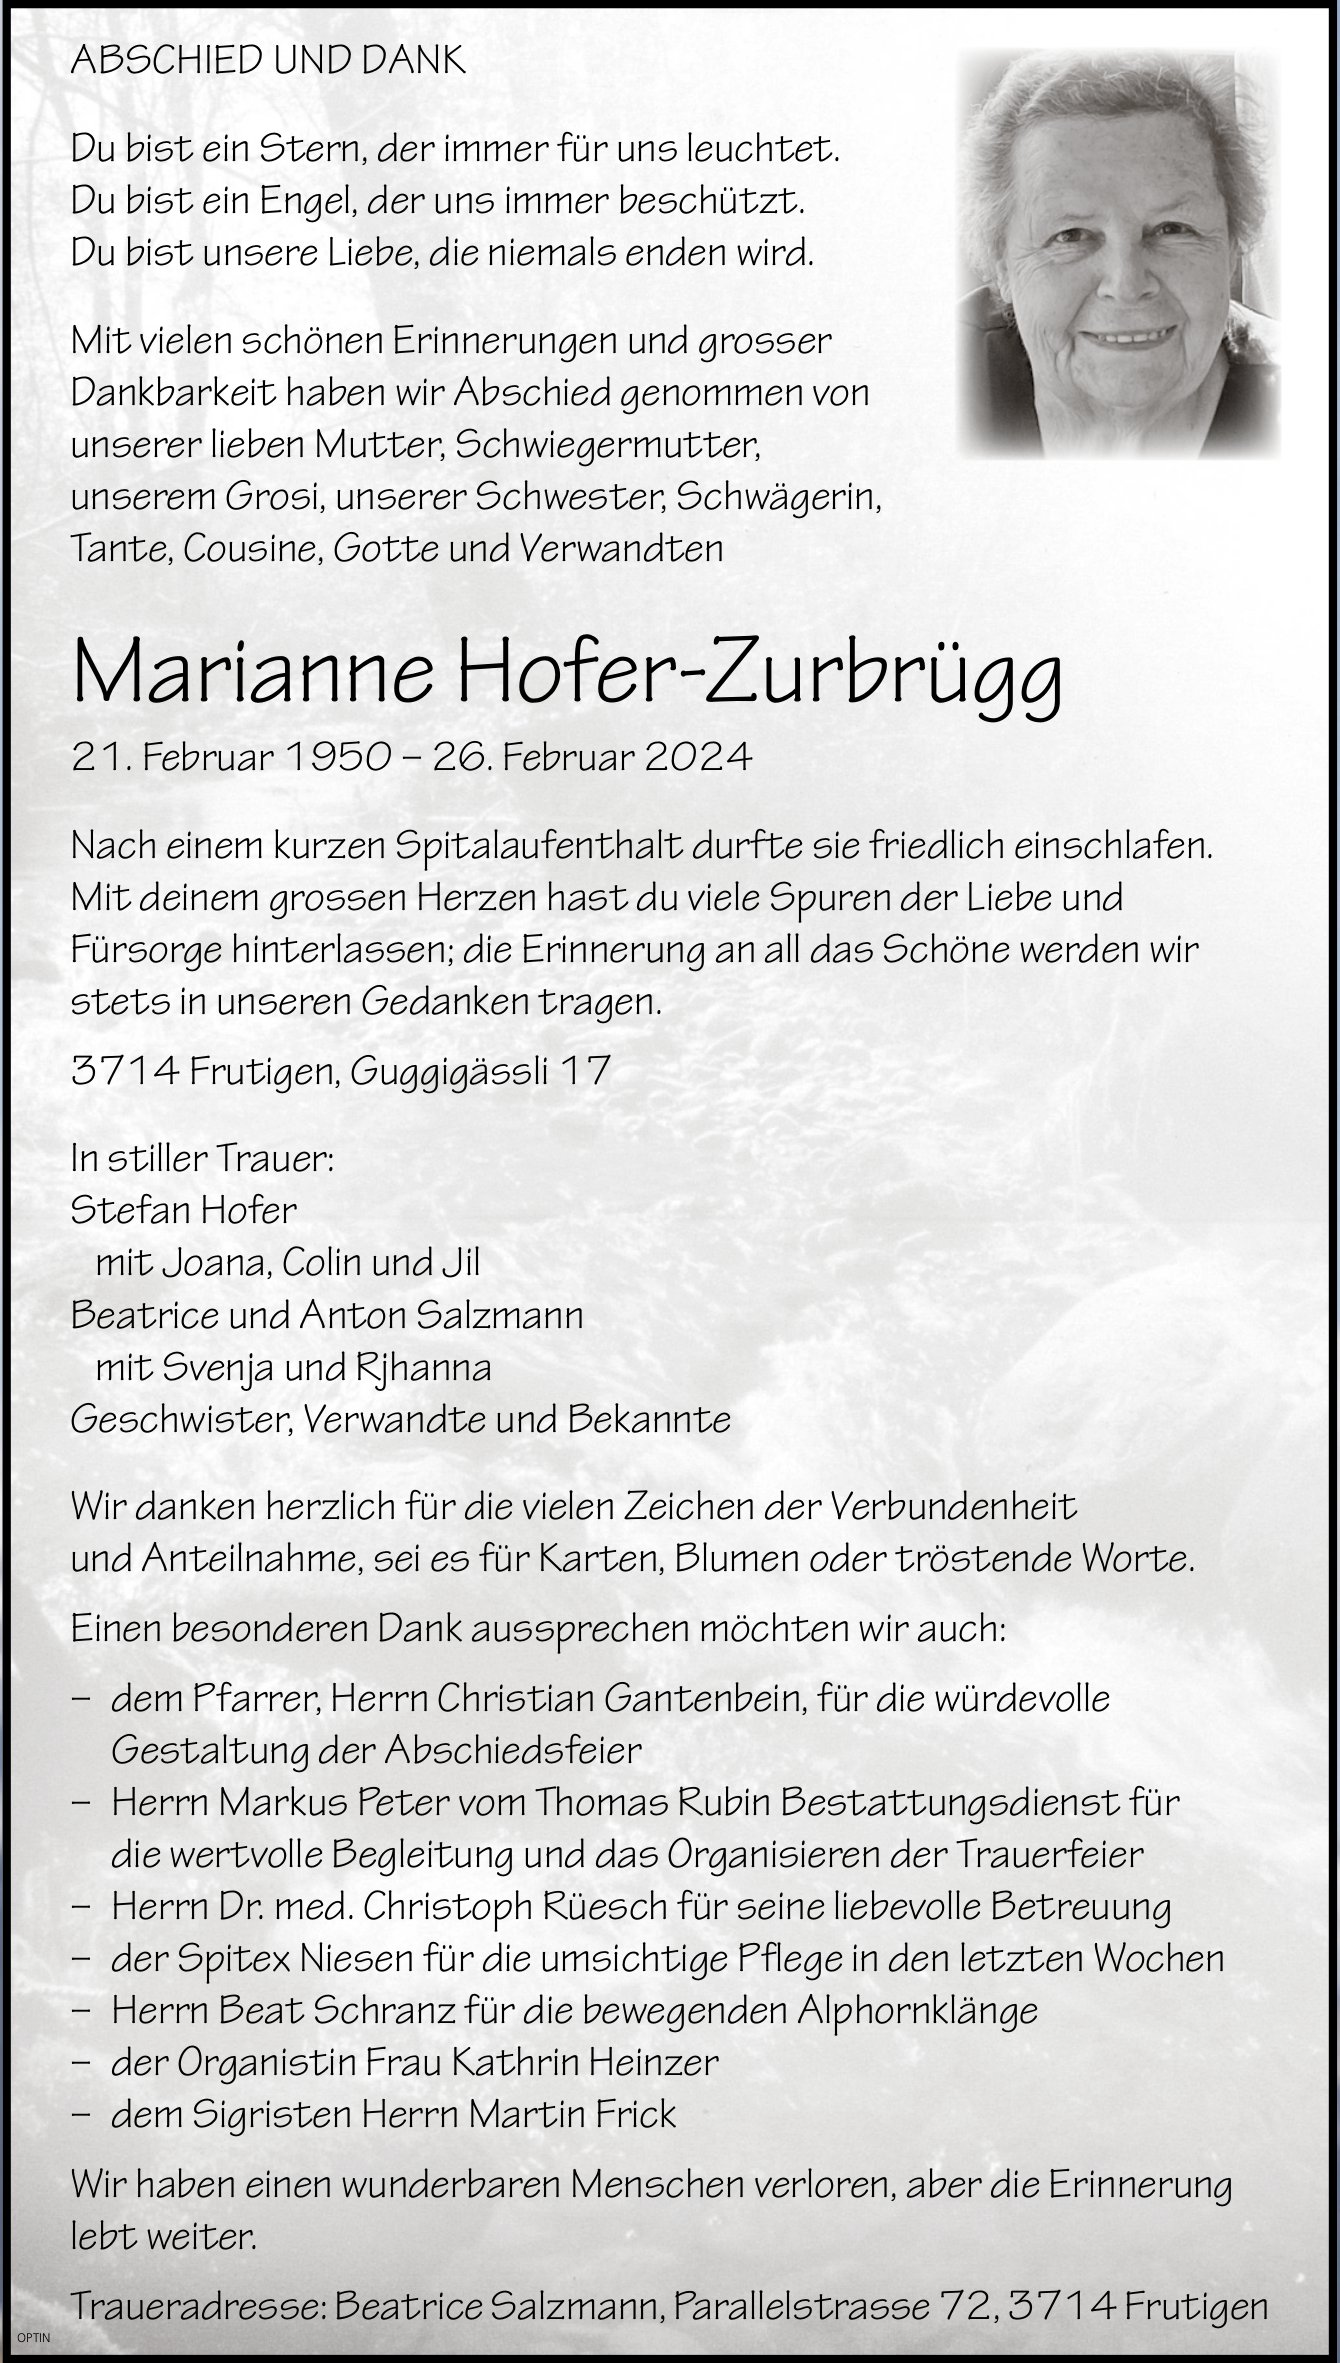 Marianne Hofer-Zurbrügg, Februar 2024 / TA